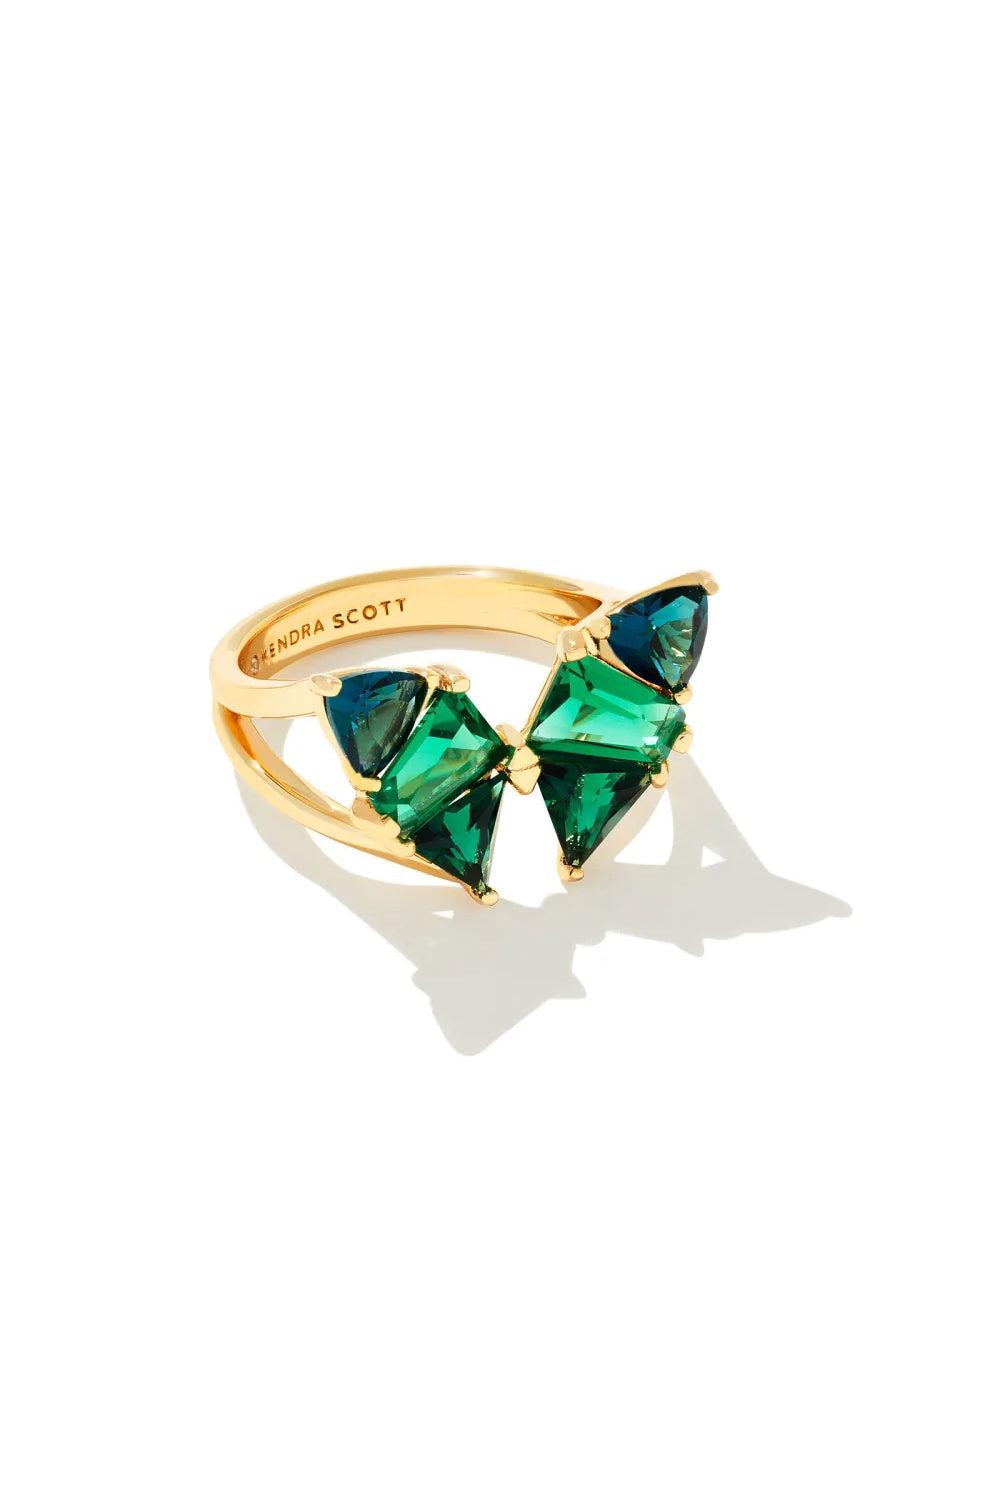 Kendra Scott: Blair Gold Butterfly Ring - Emerald Mix | Makk Fashions